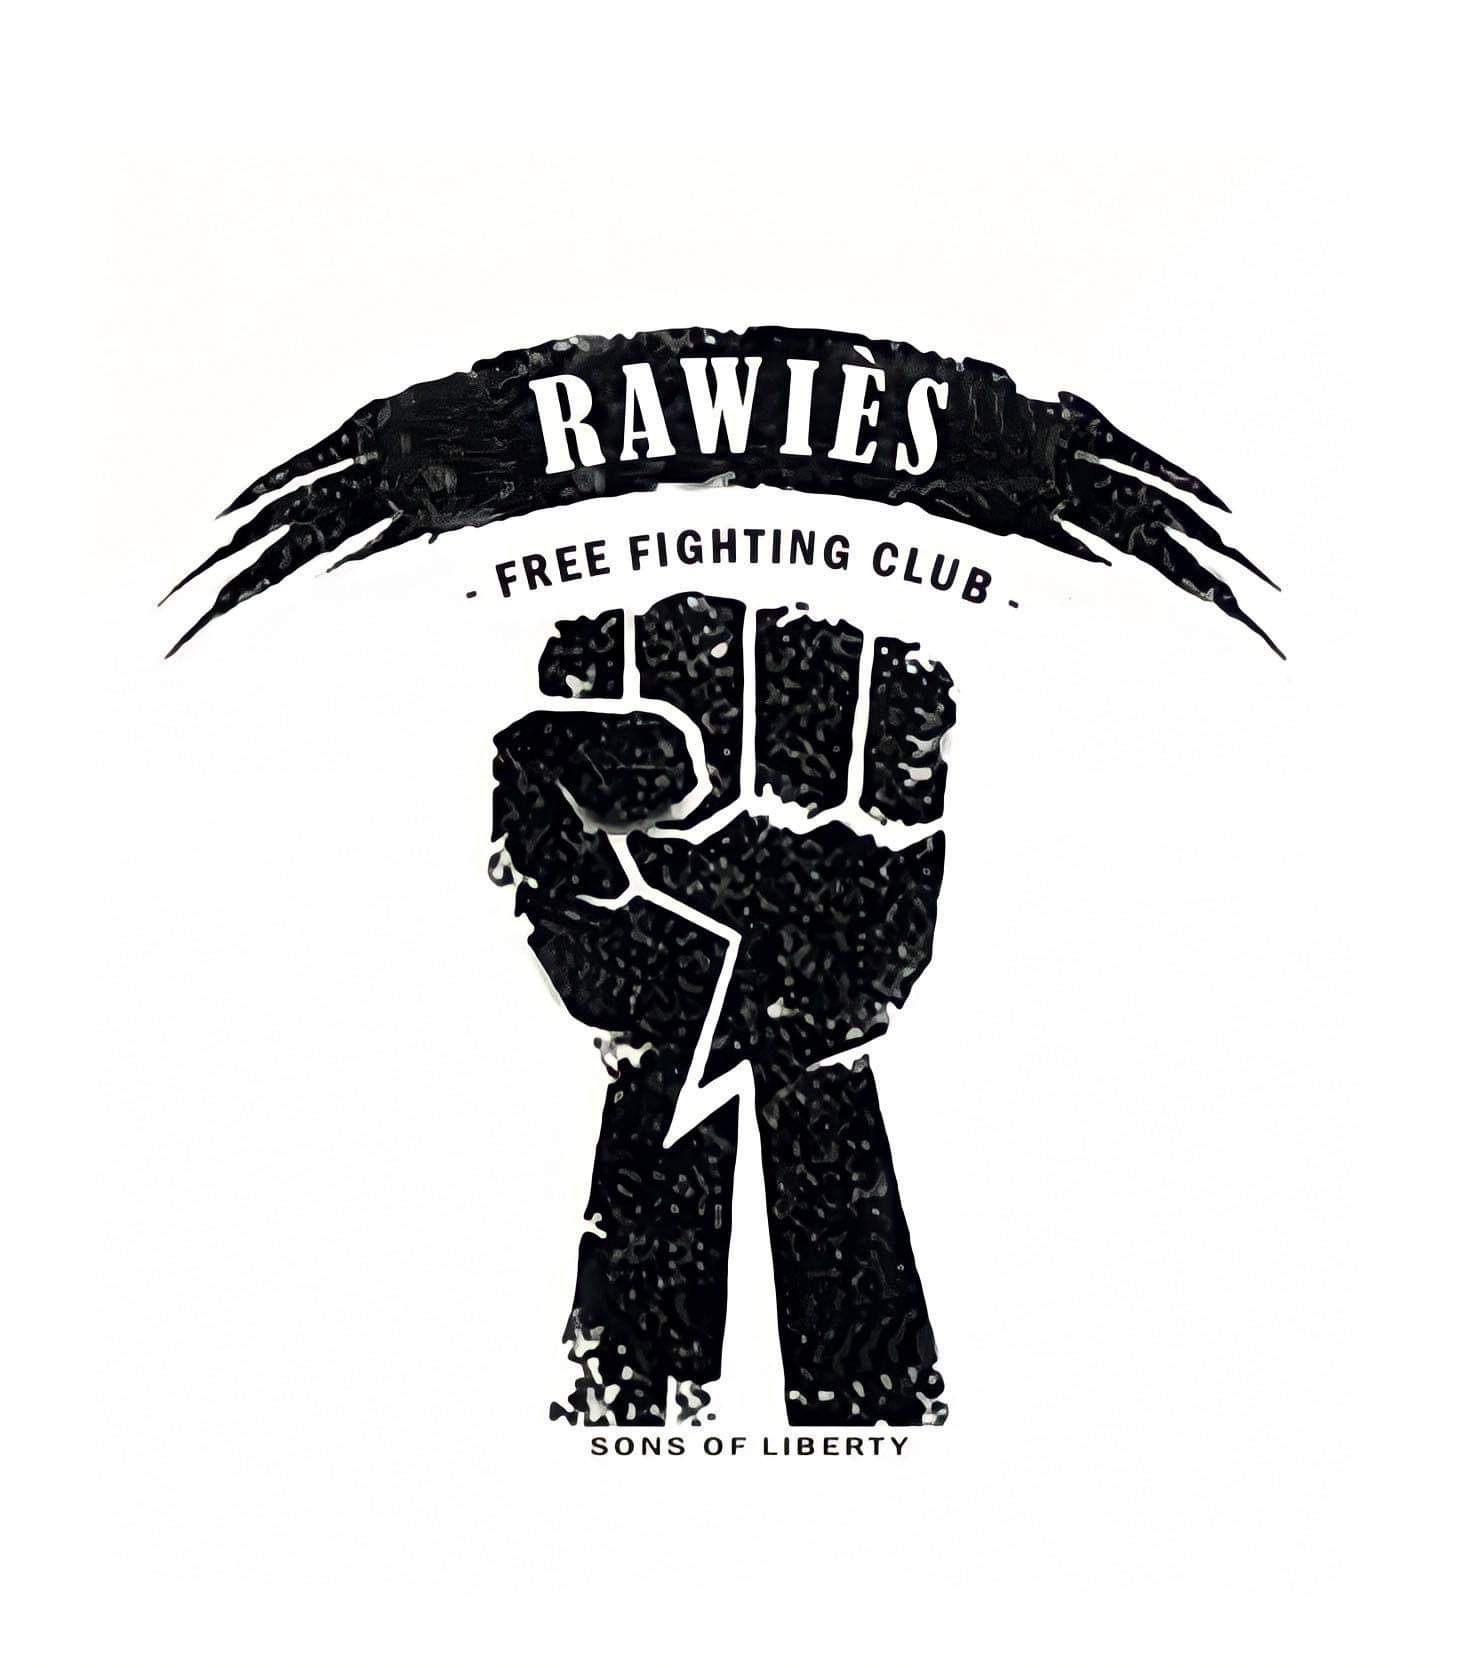 Rawies free fighting club